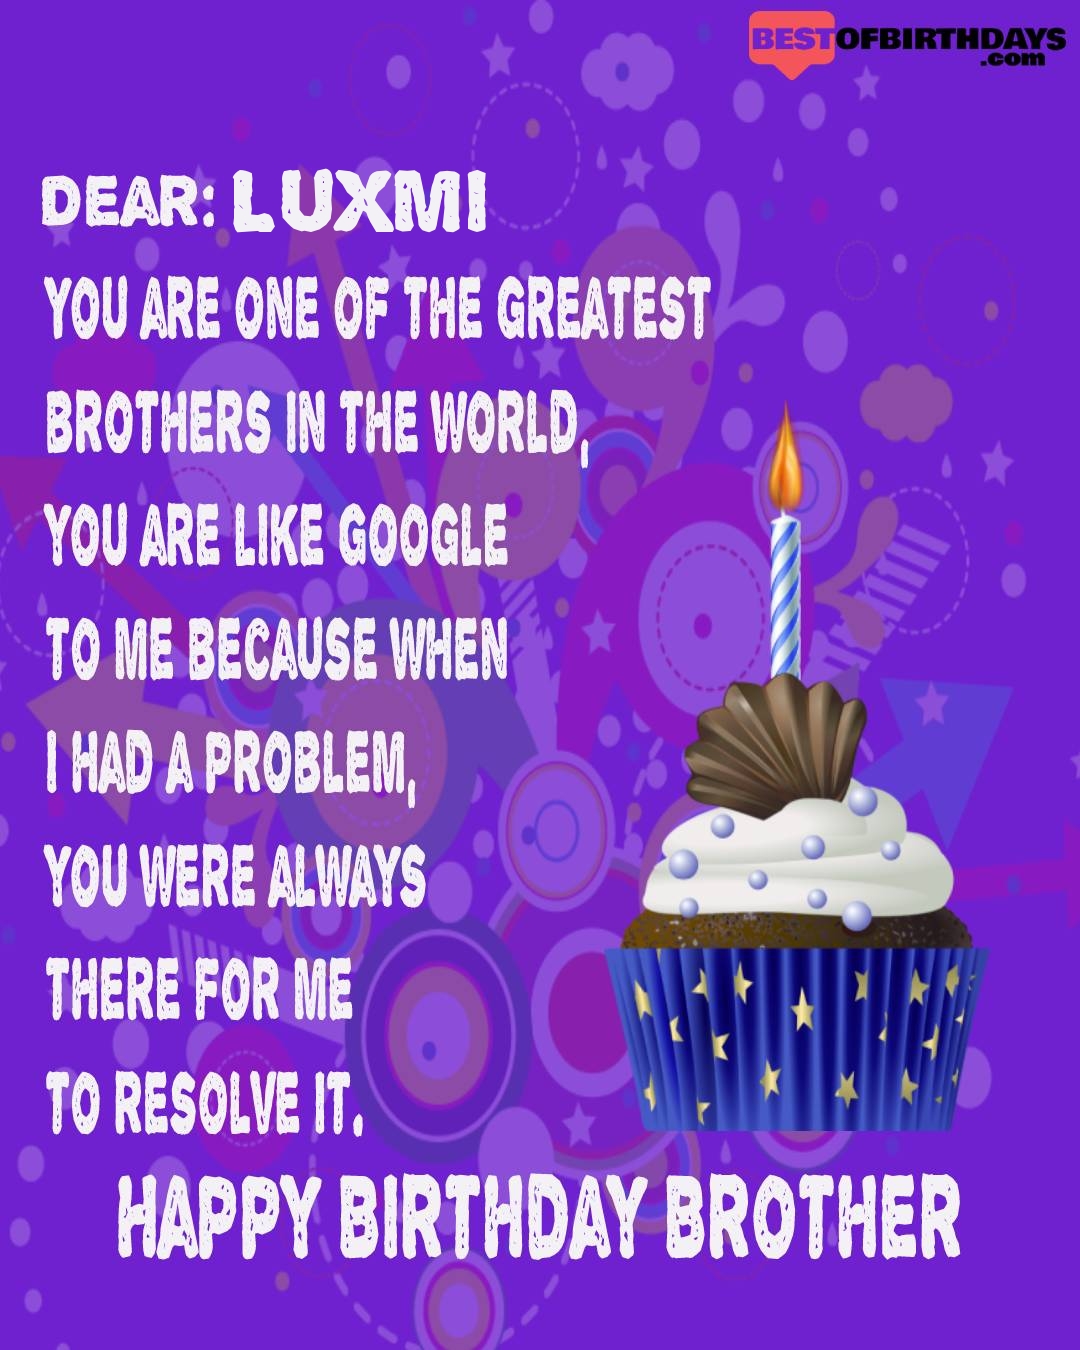 Happy birthday luxmi bhai brother bro